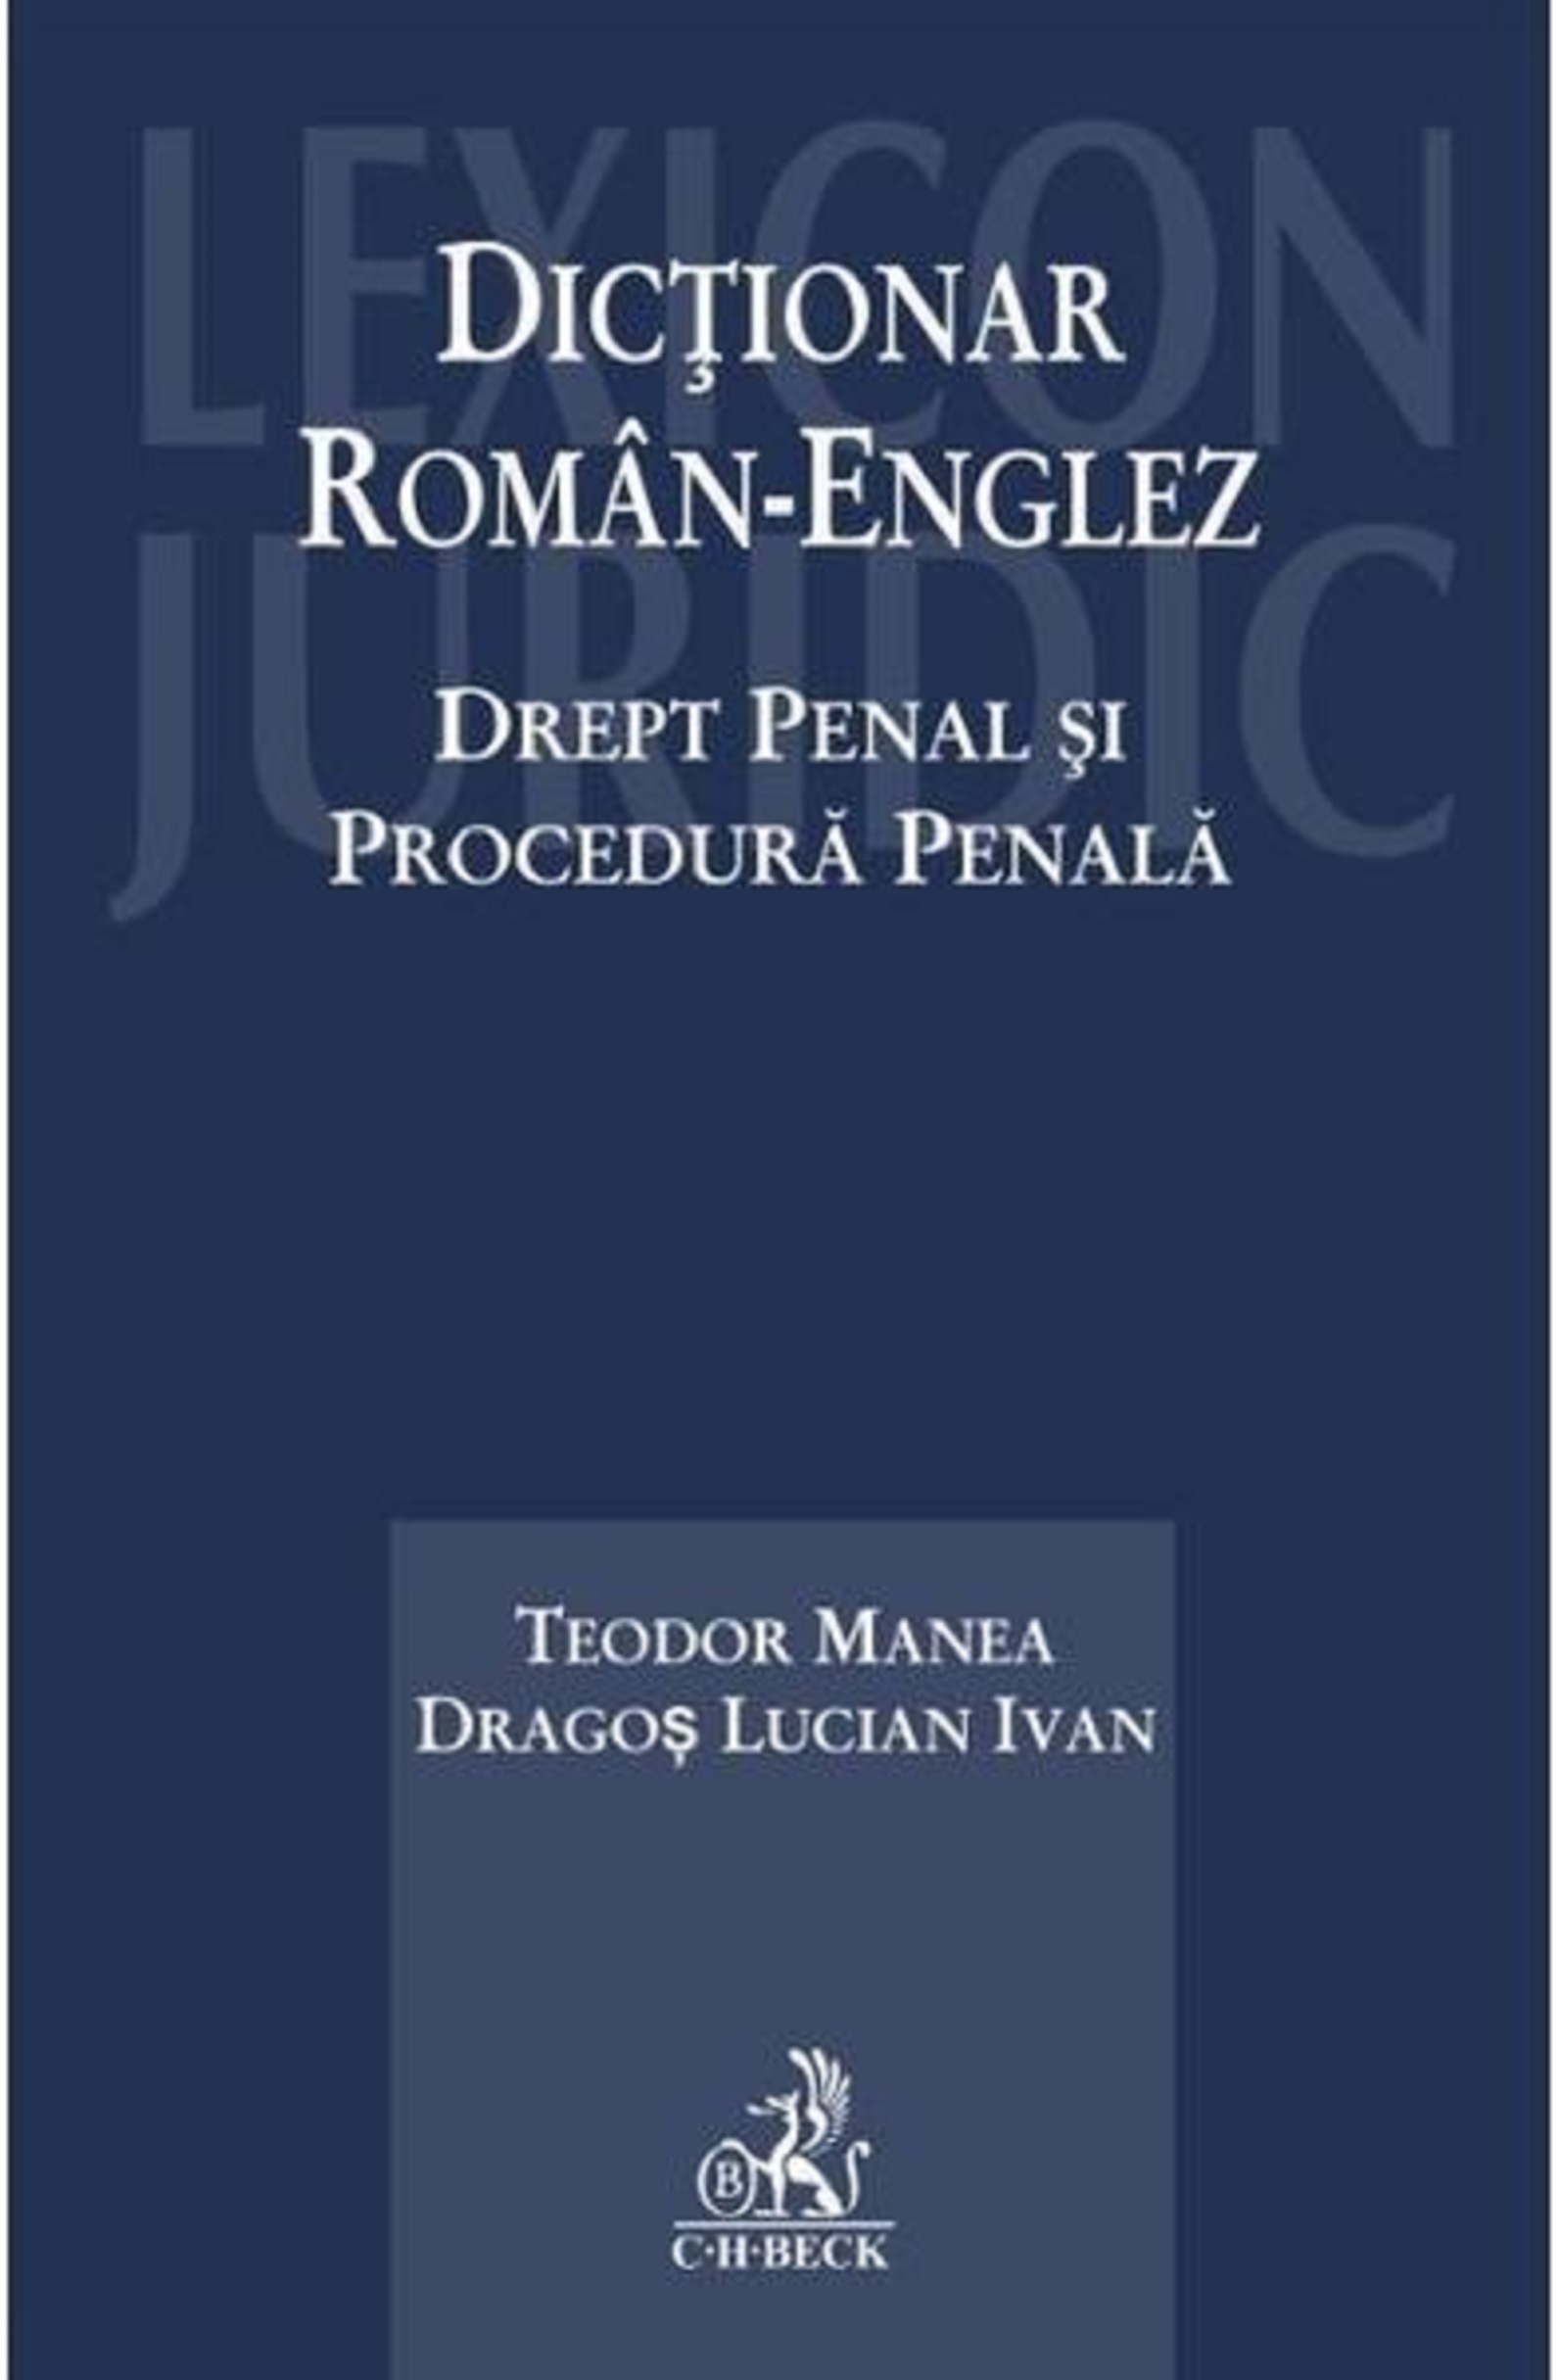 Dictionar roman-englez. Drept penal si procedura penala | Teodor Manea, Dragos Lucian Ivan C.H. Beck poza bestsellers.ro